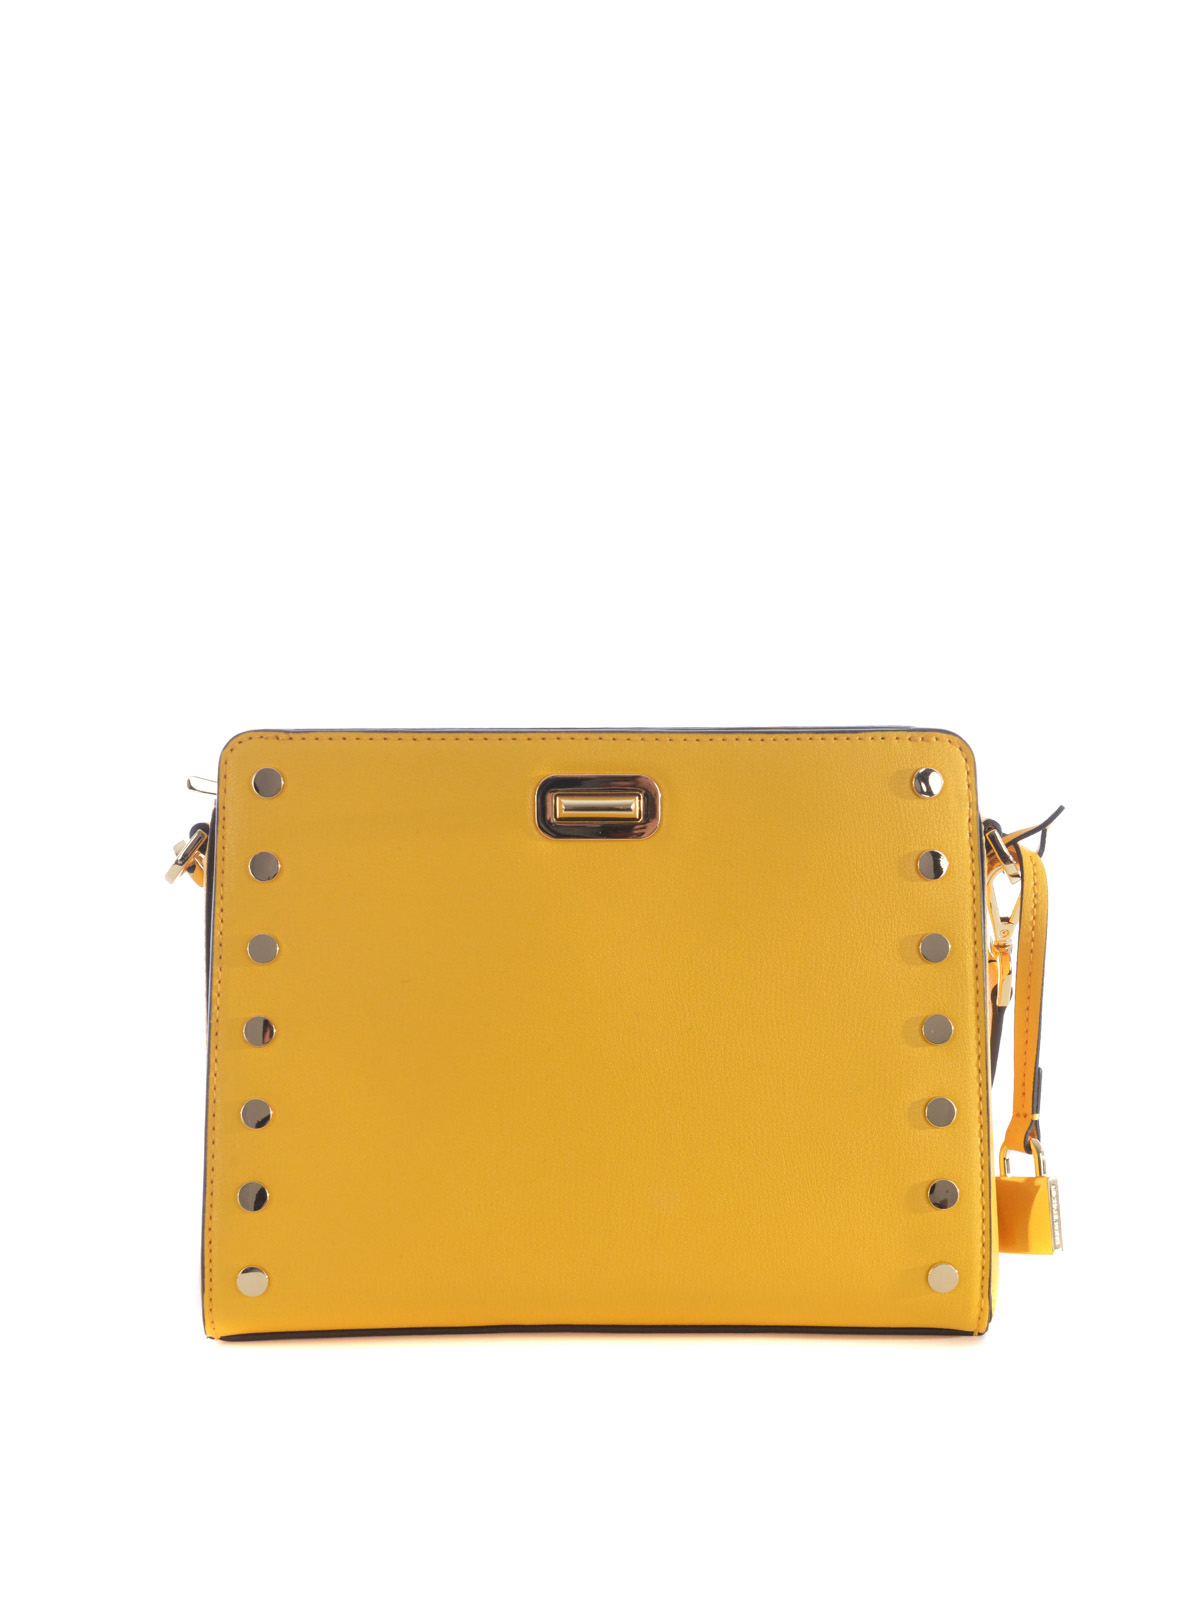 michael kors mustard yellow purse